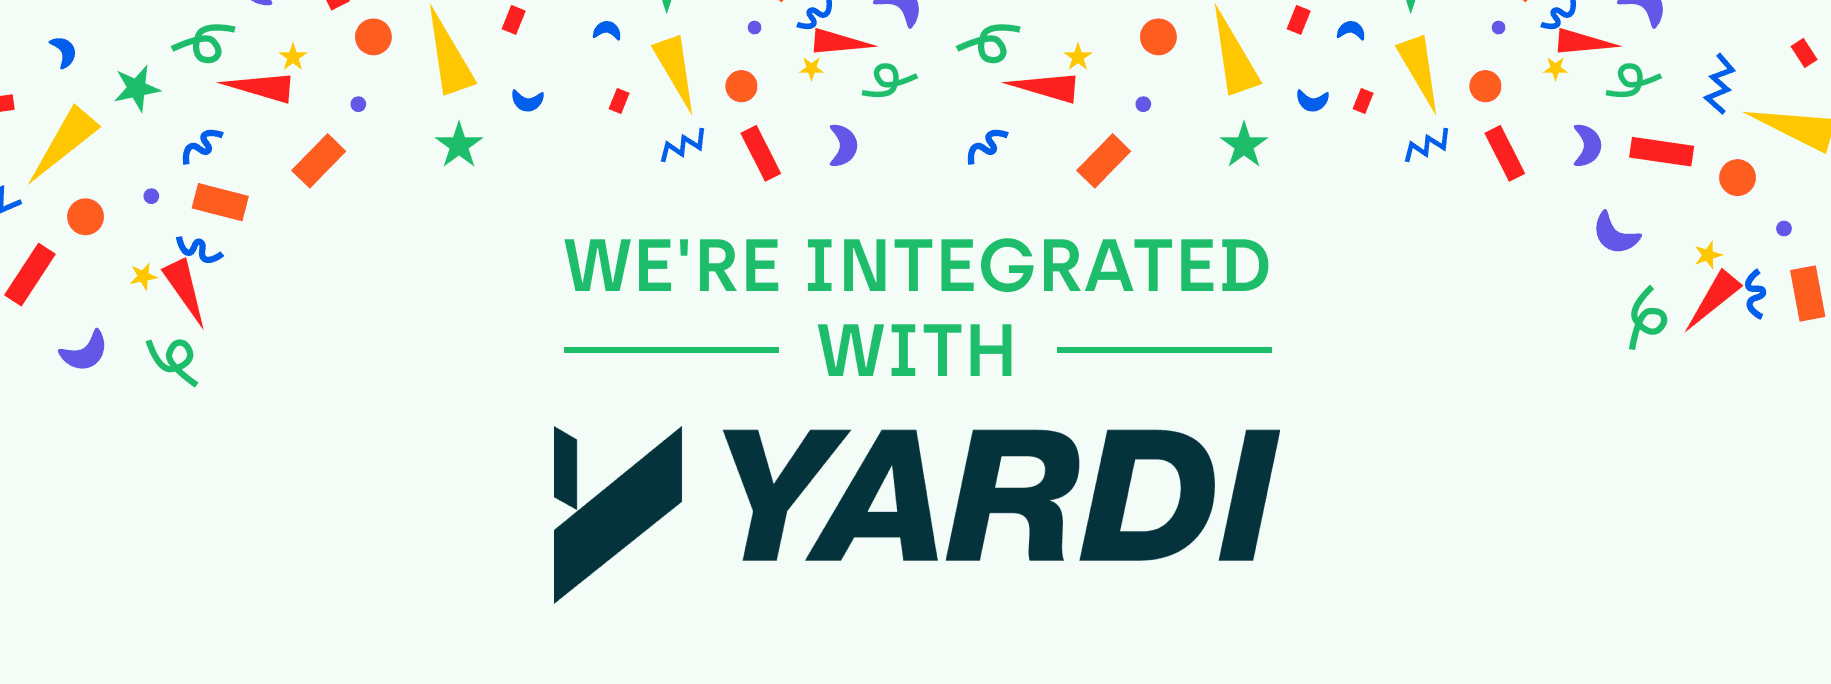 AppWork has a new Yardi integration